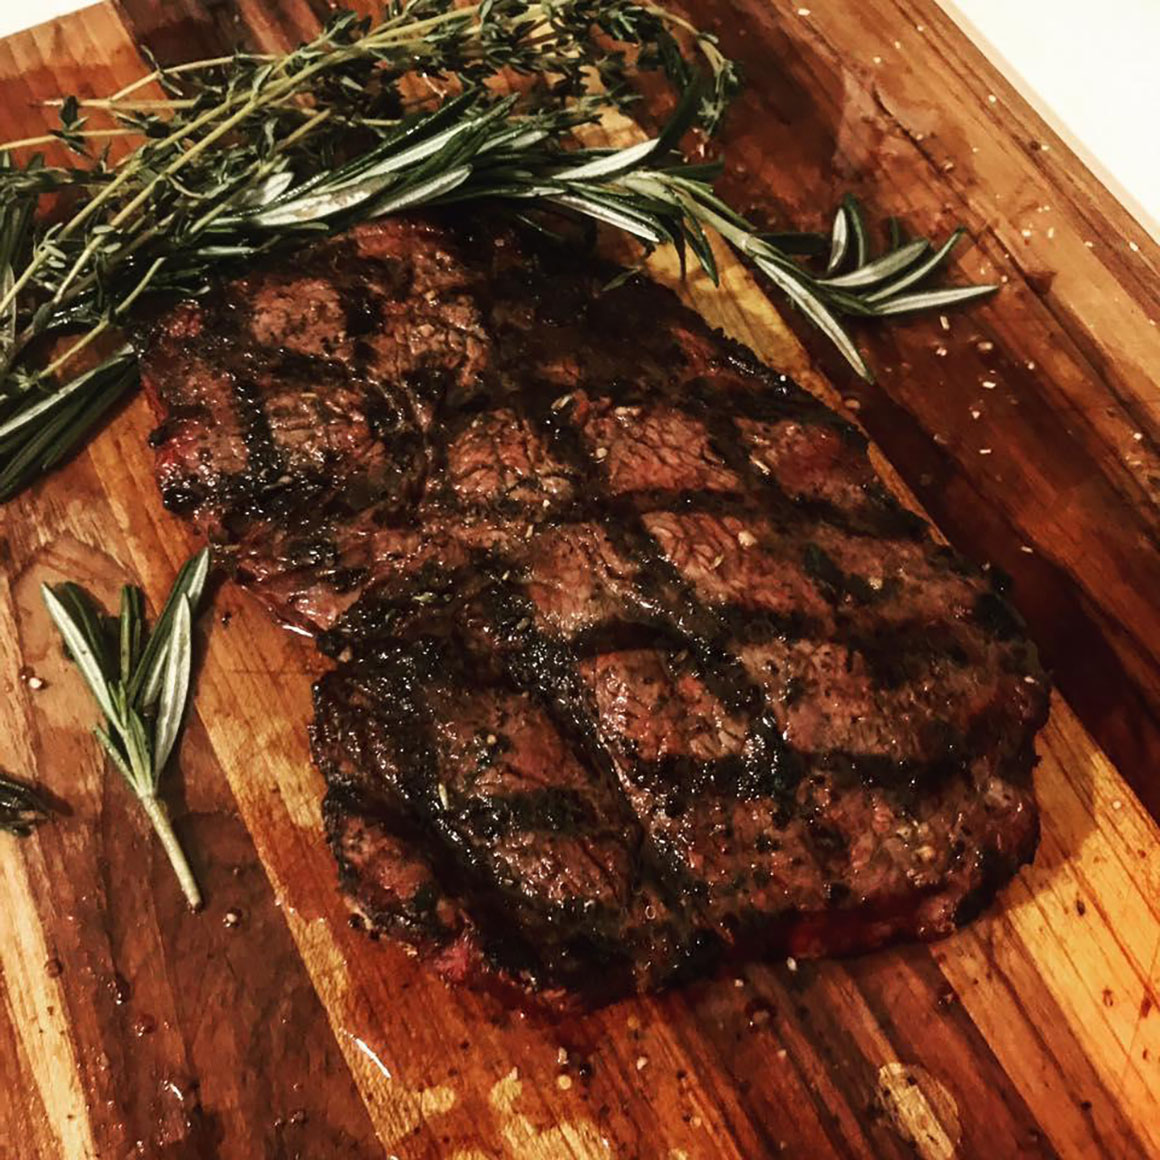 grilled steak on cutting board